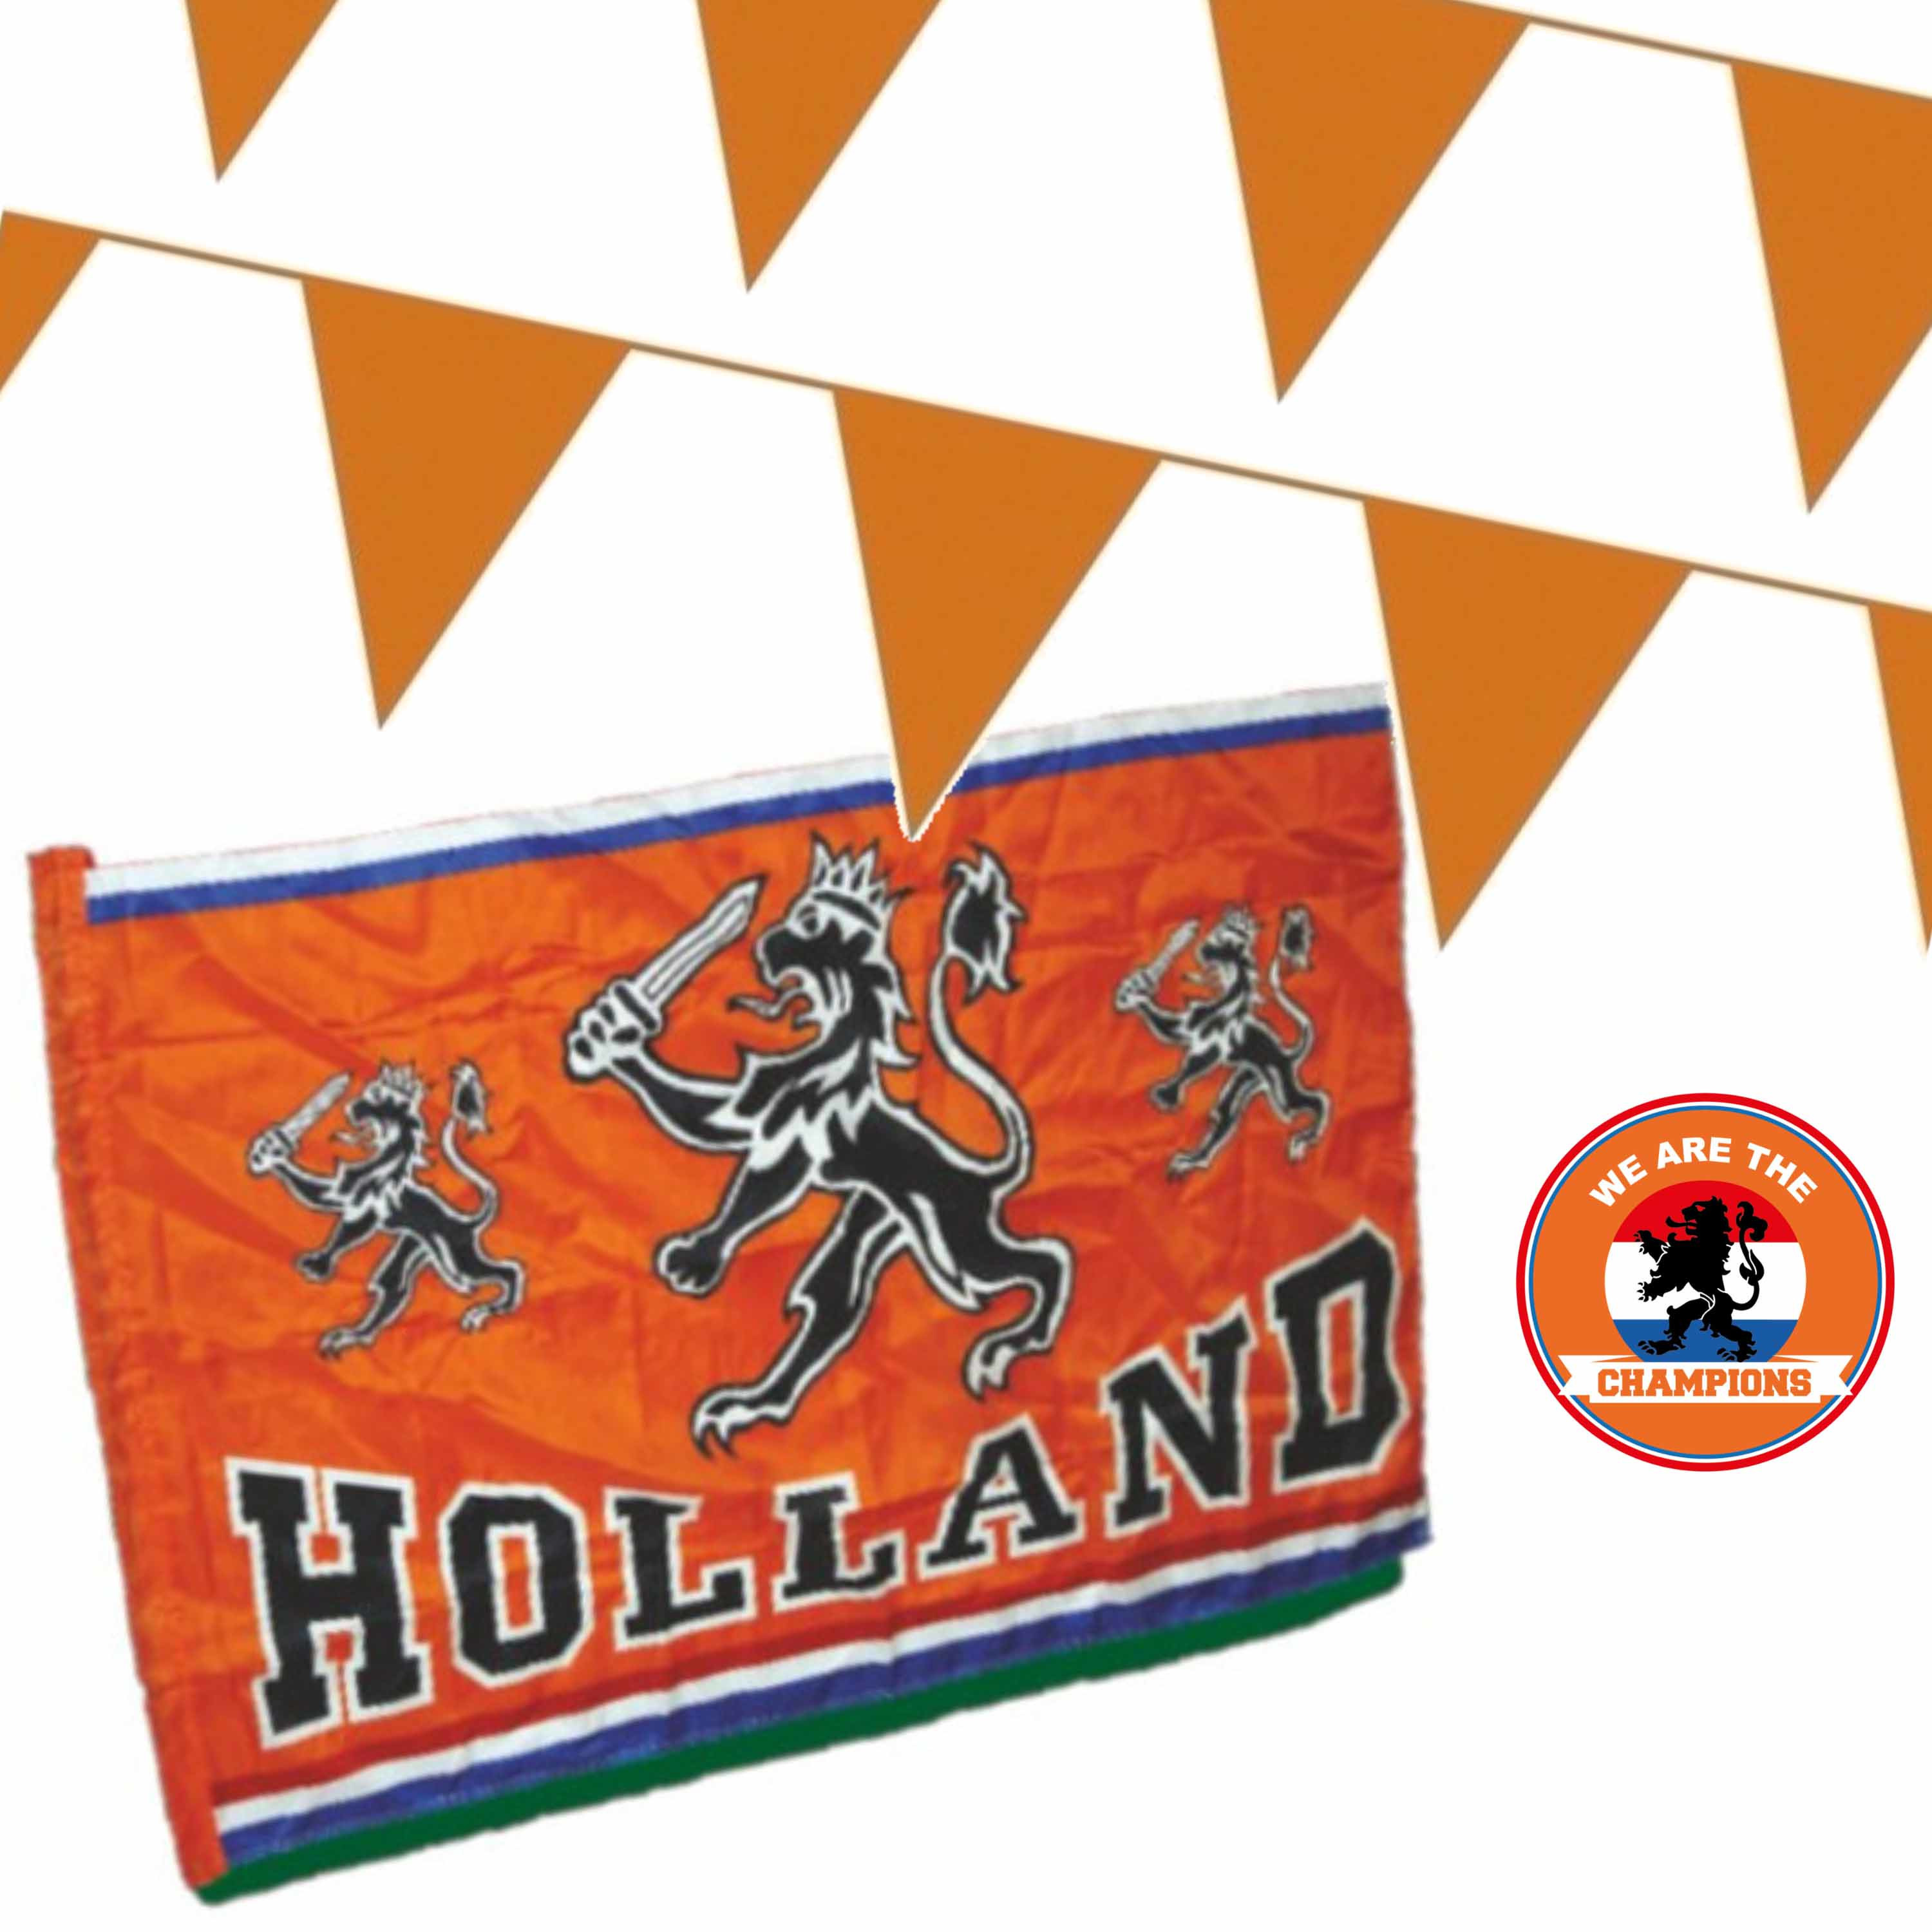 EK oranje straat- huis versiering pakket met oa 1x Holland spandoek, 100 meter oranje vlaggenlijnen